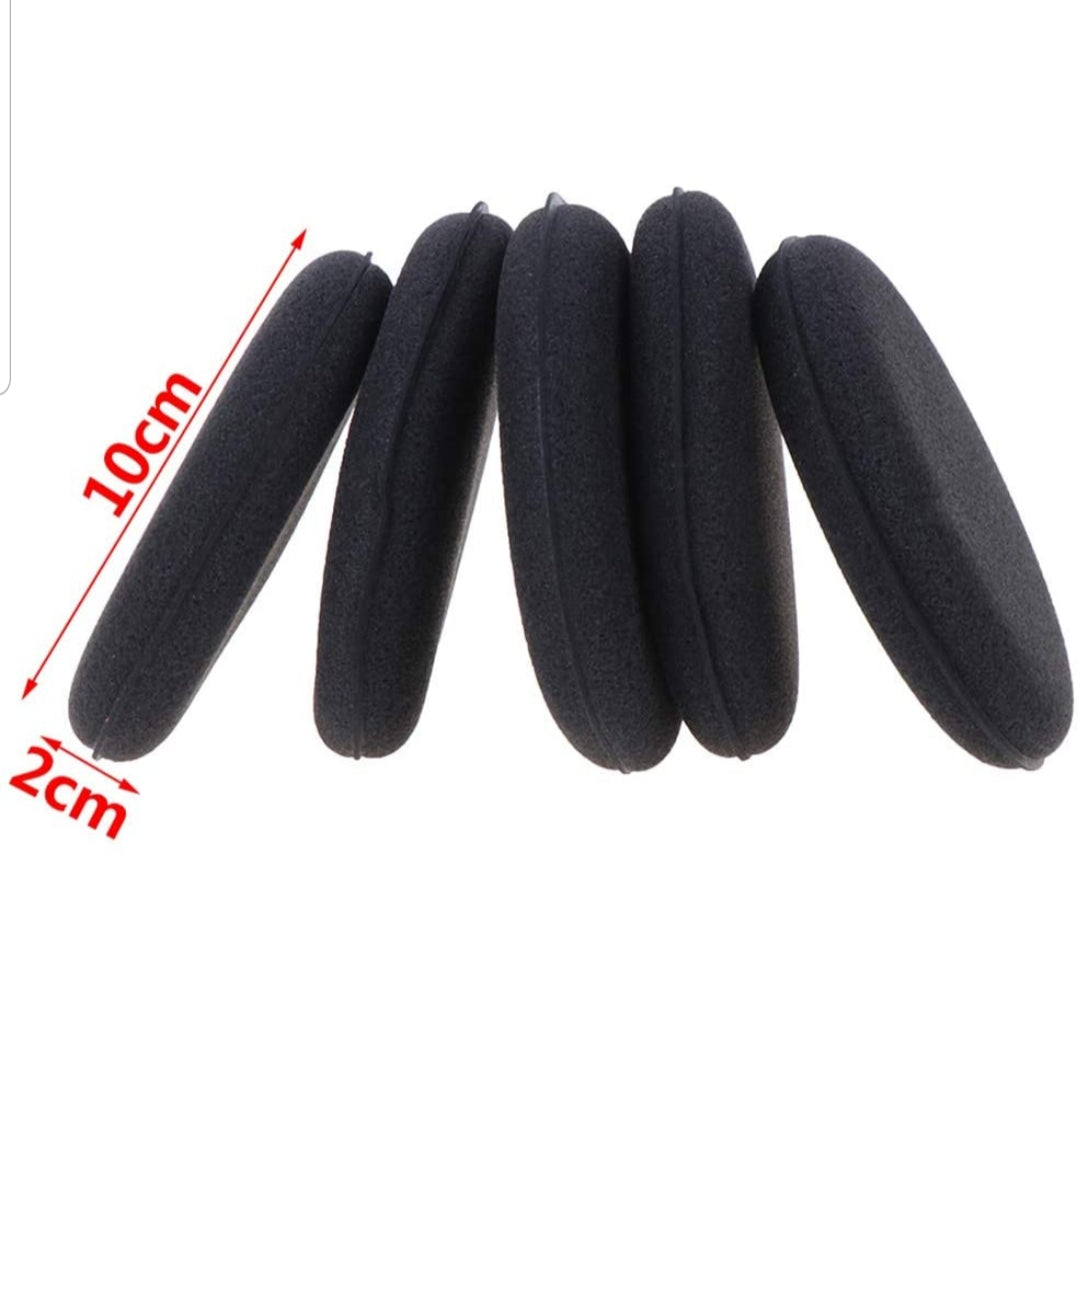 ImportWorx Circle Black Foam Applicator Sponge Pads 4"